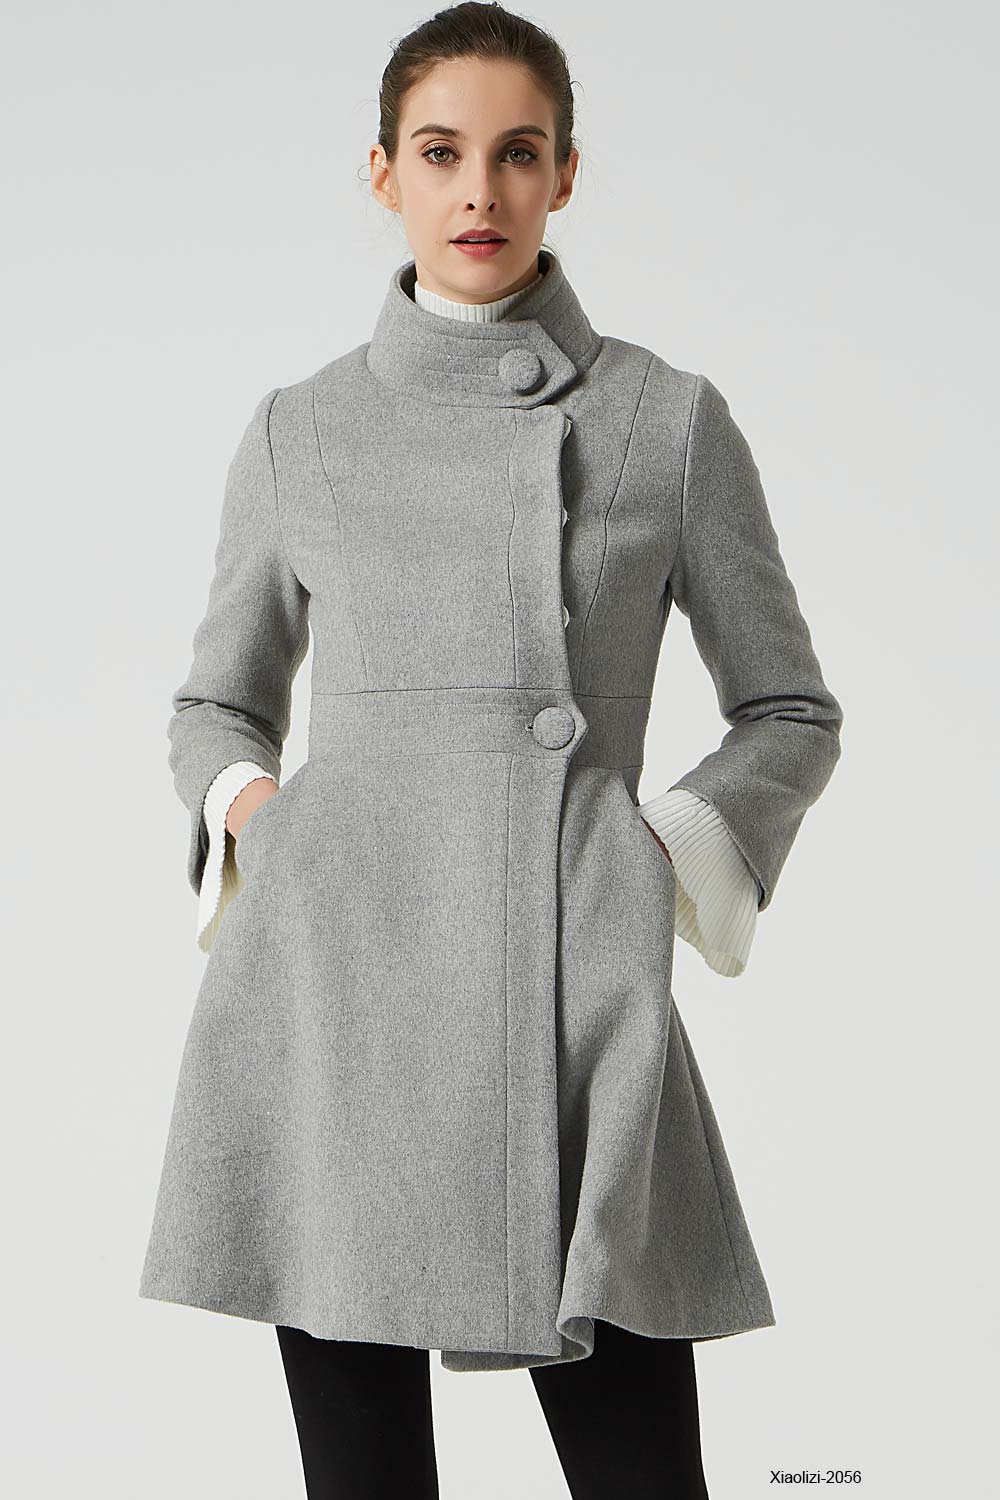 light gray wool coat, womens short winter coat 2056 – XiaoLizi